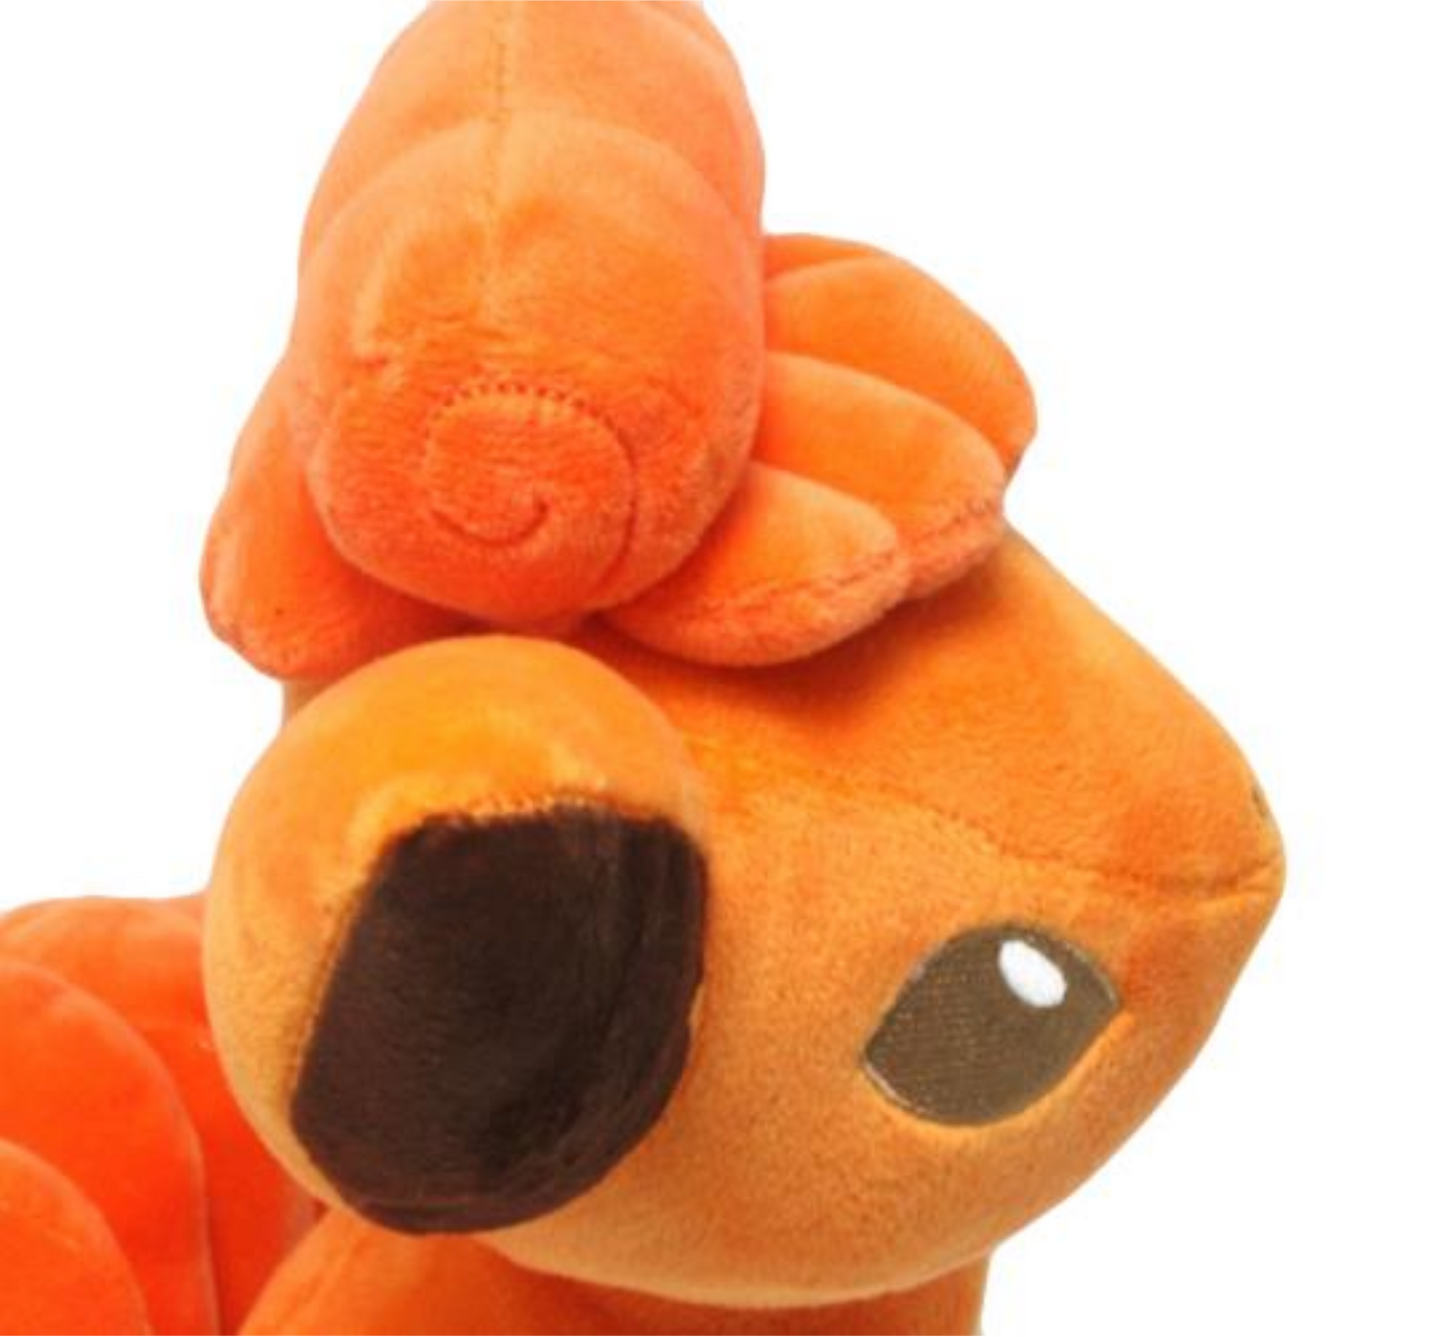 Pokemon Vulpix 10" Stuffed Animal Plush Cute Hugging Doll Soft Toy Gifts for Kids